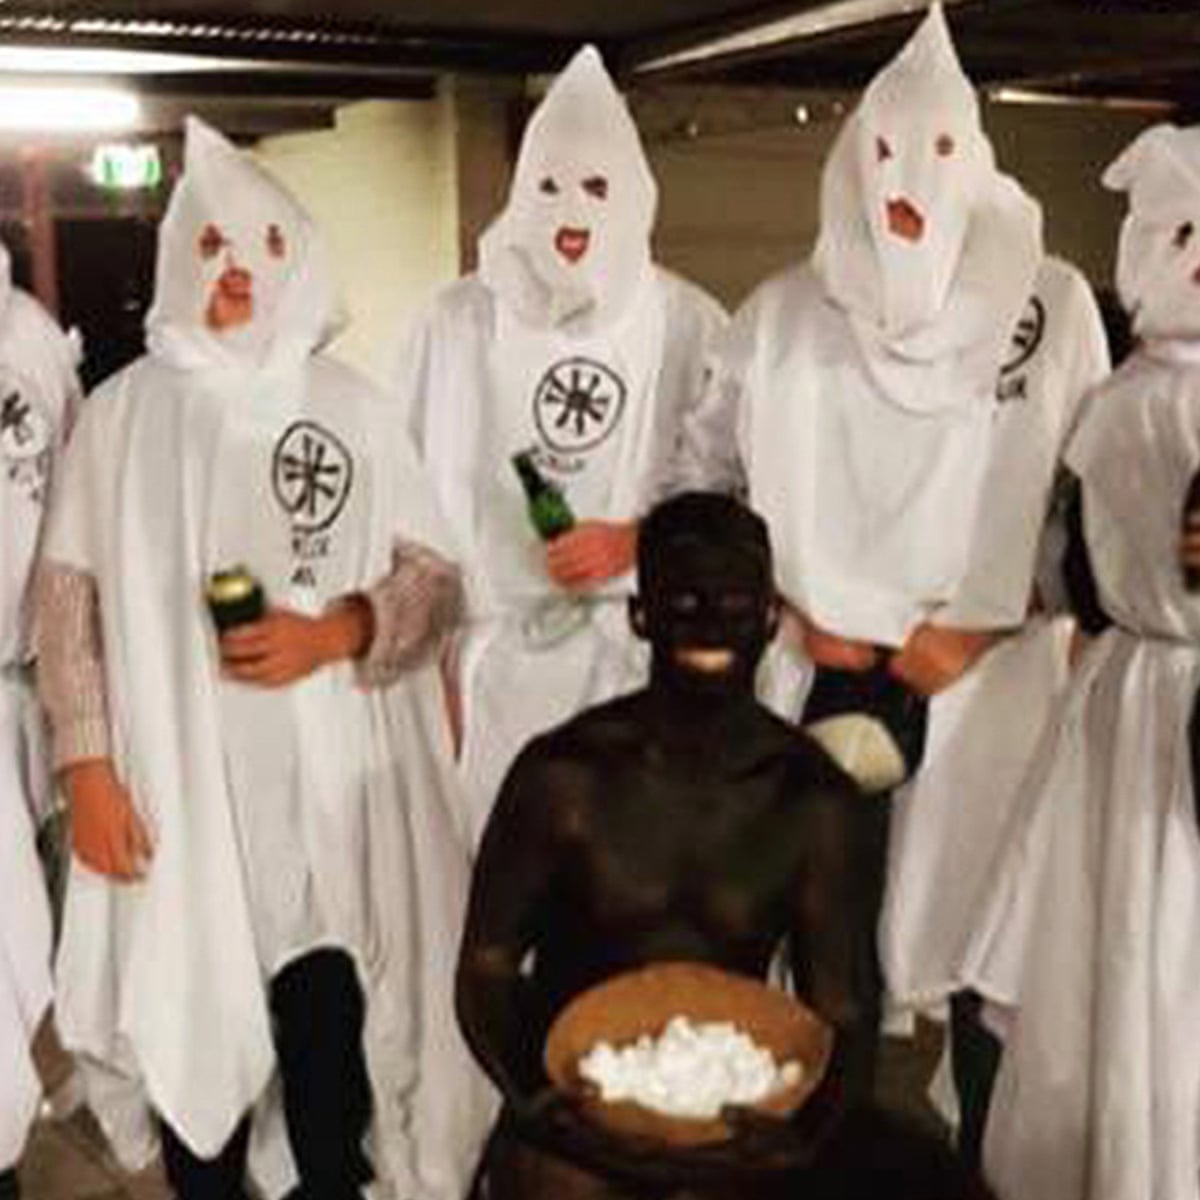 Australian university students dress as Ku Klux Klan and in